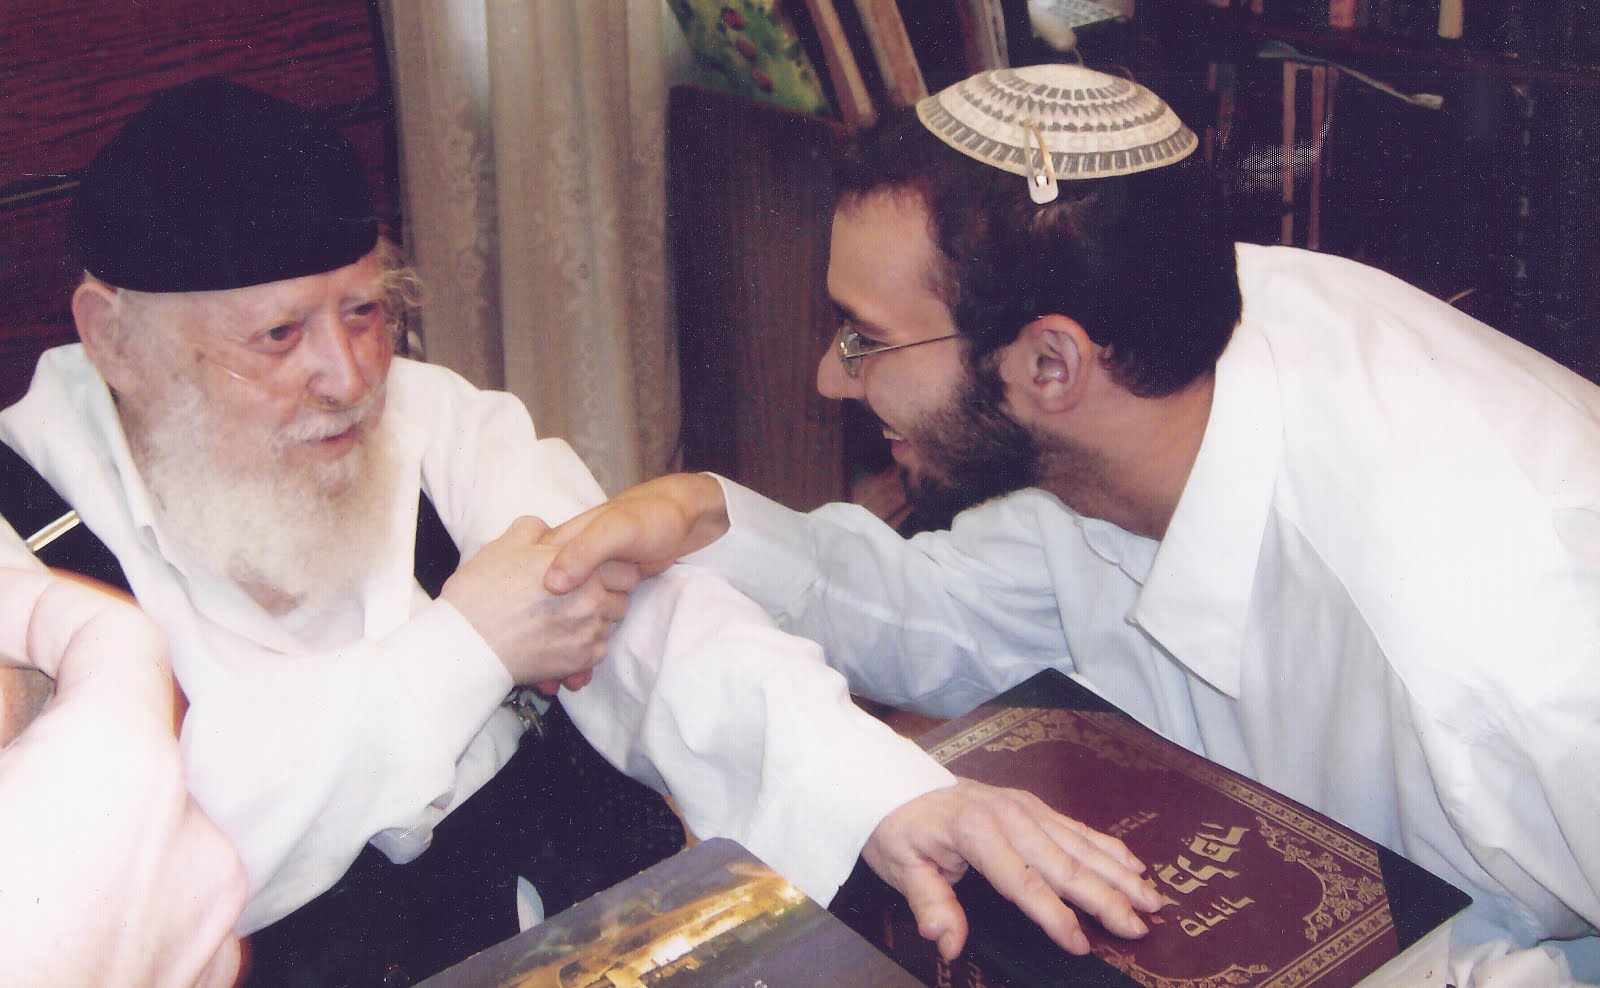 Receiving a bracha from Rabbi Avrom Shapiro